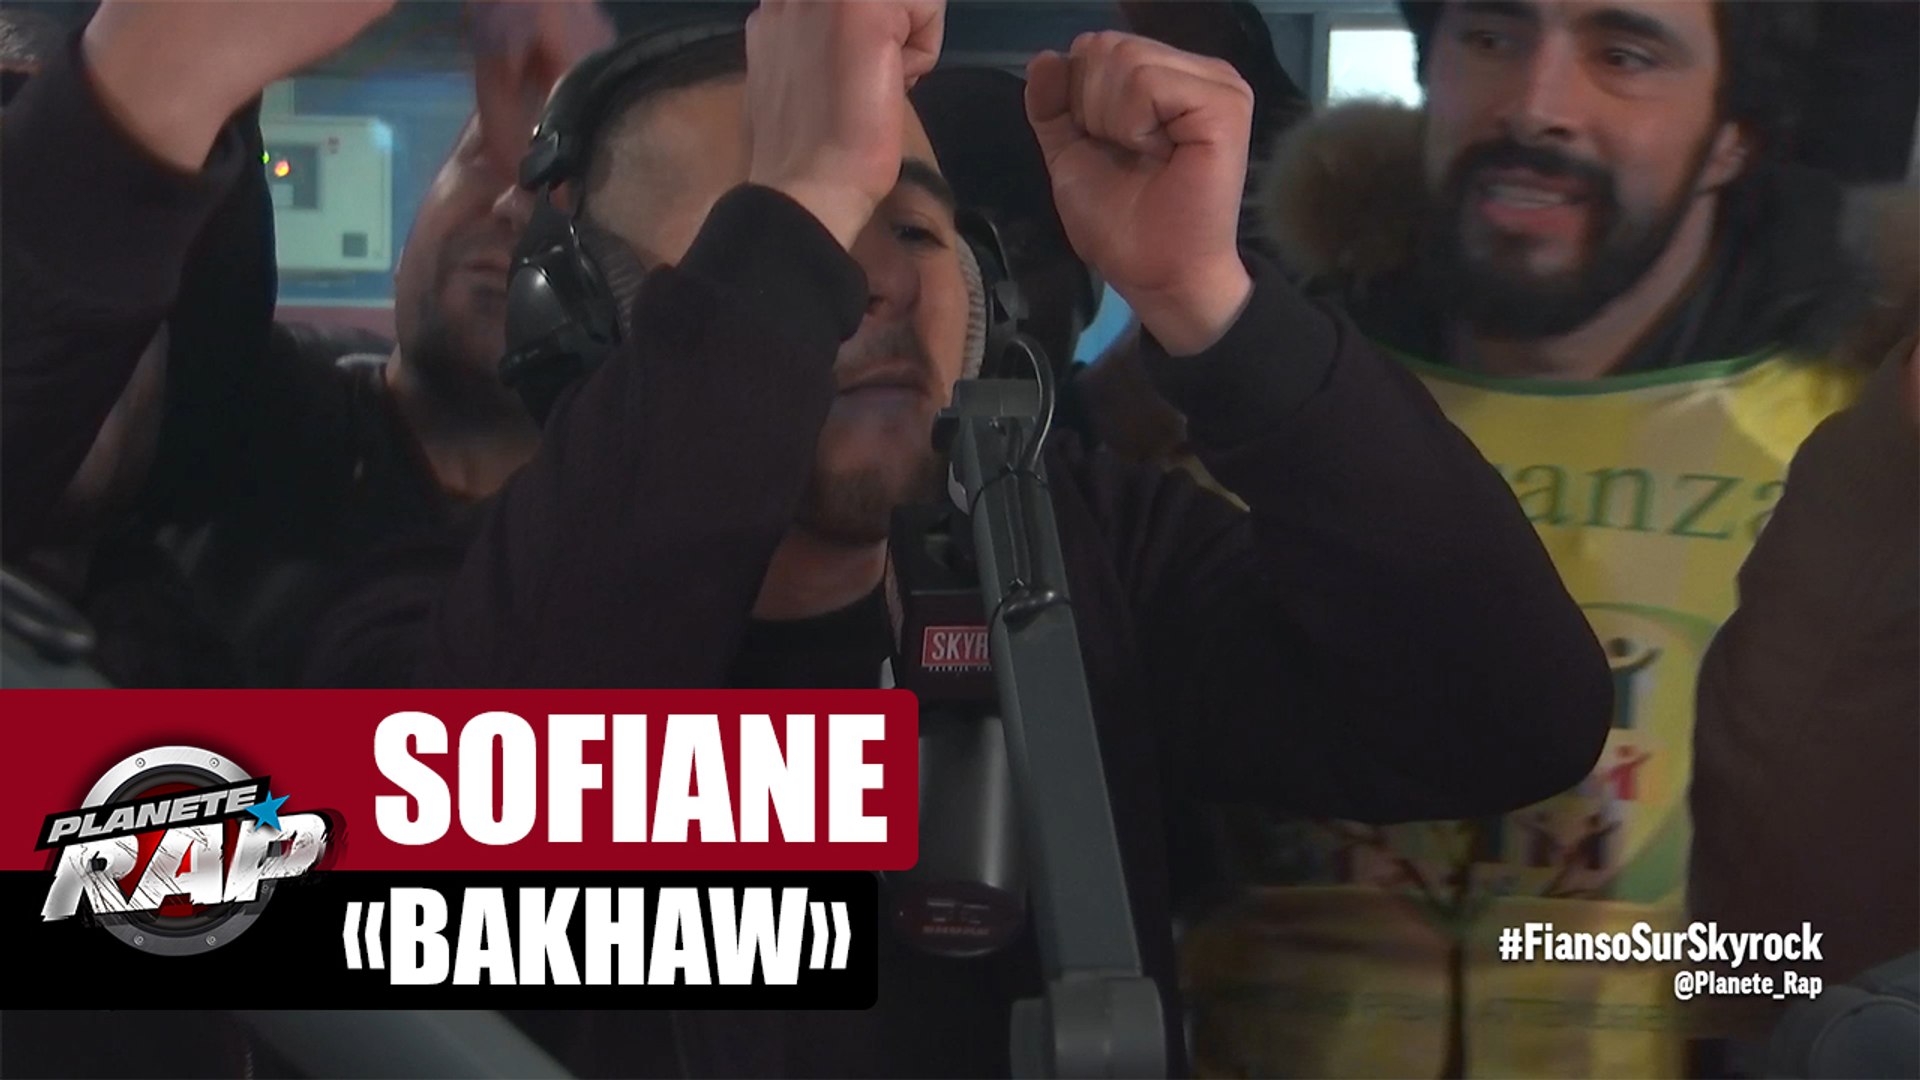 Sofiane "Bakhaw" en live dans Planète Rap - Vidéo Dailymotion